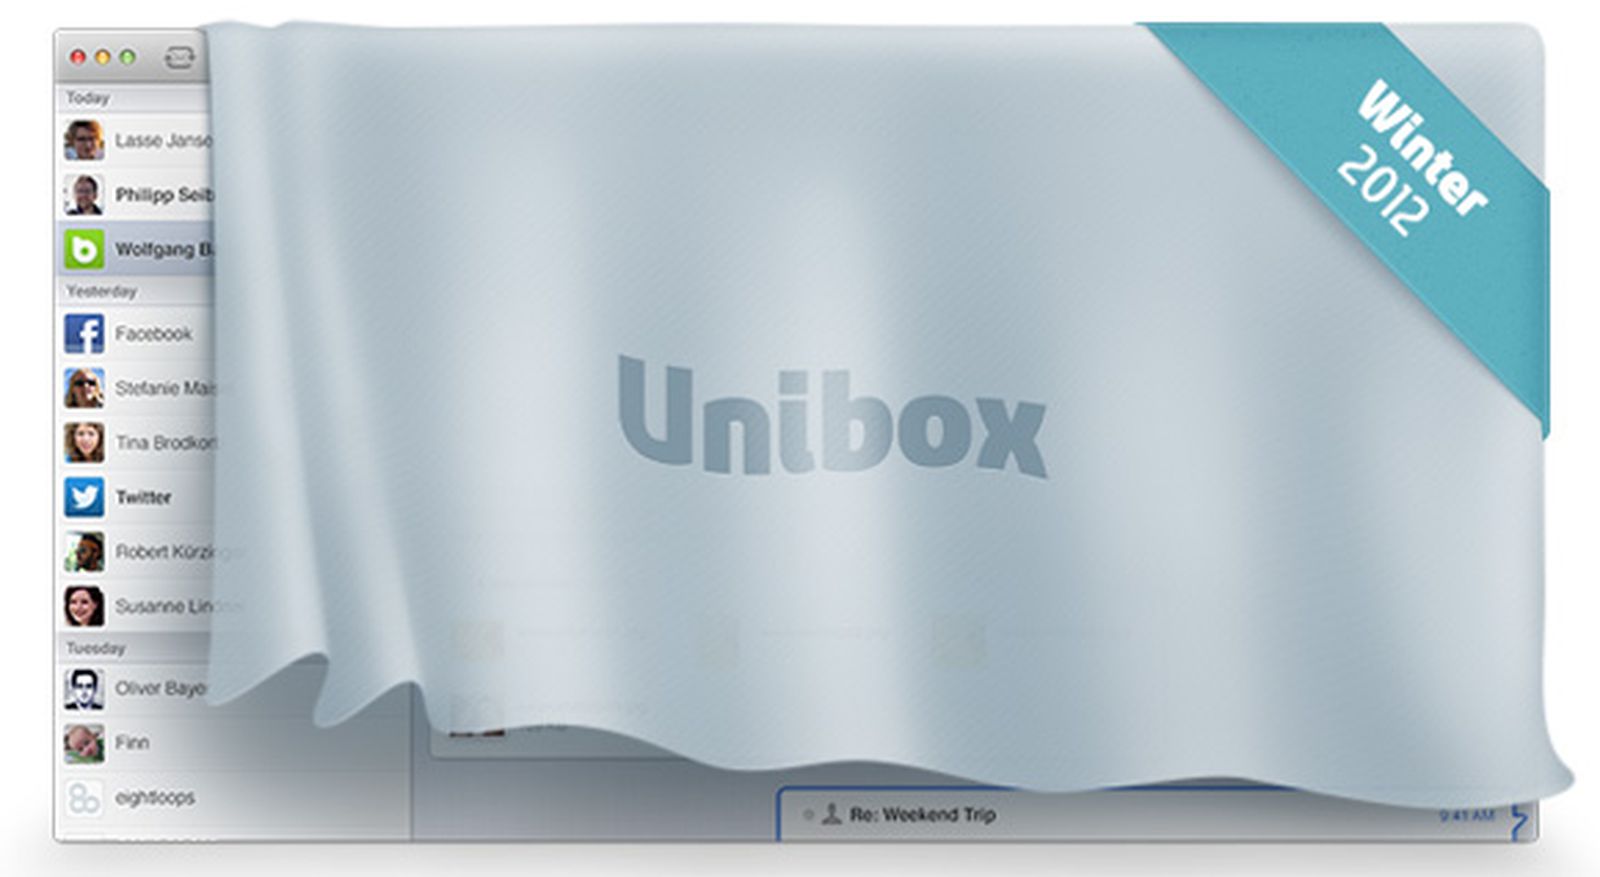 unibox for iphone